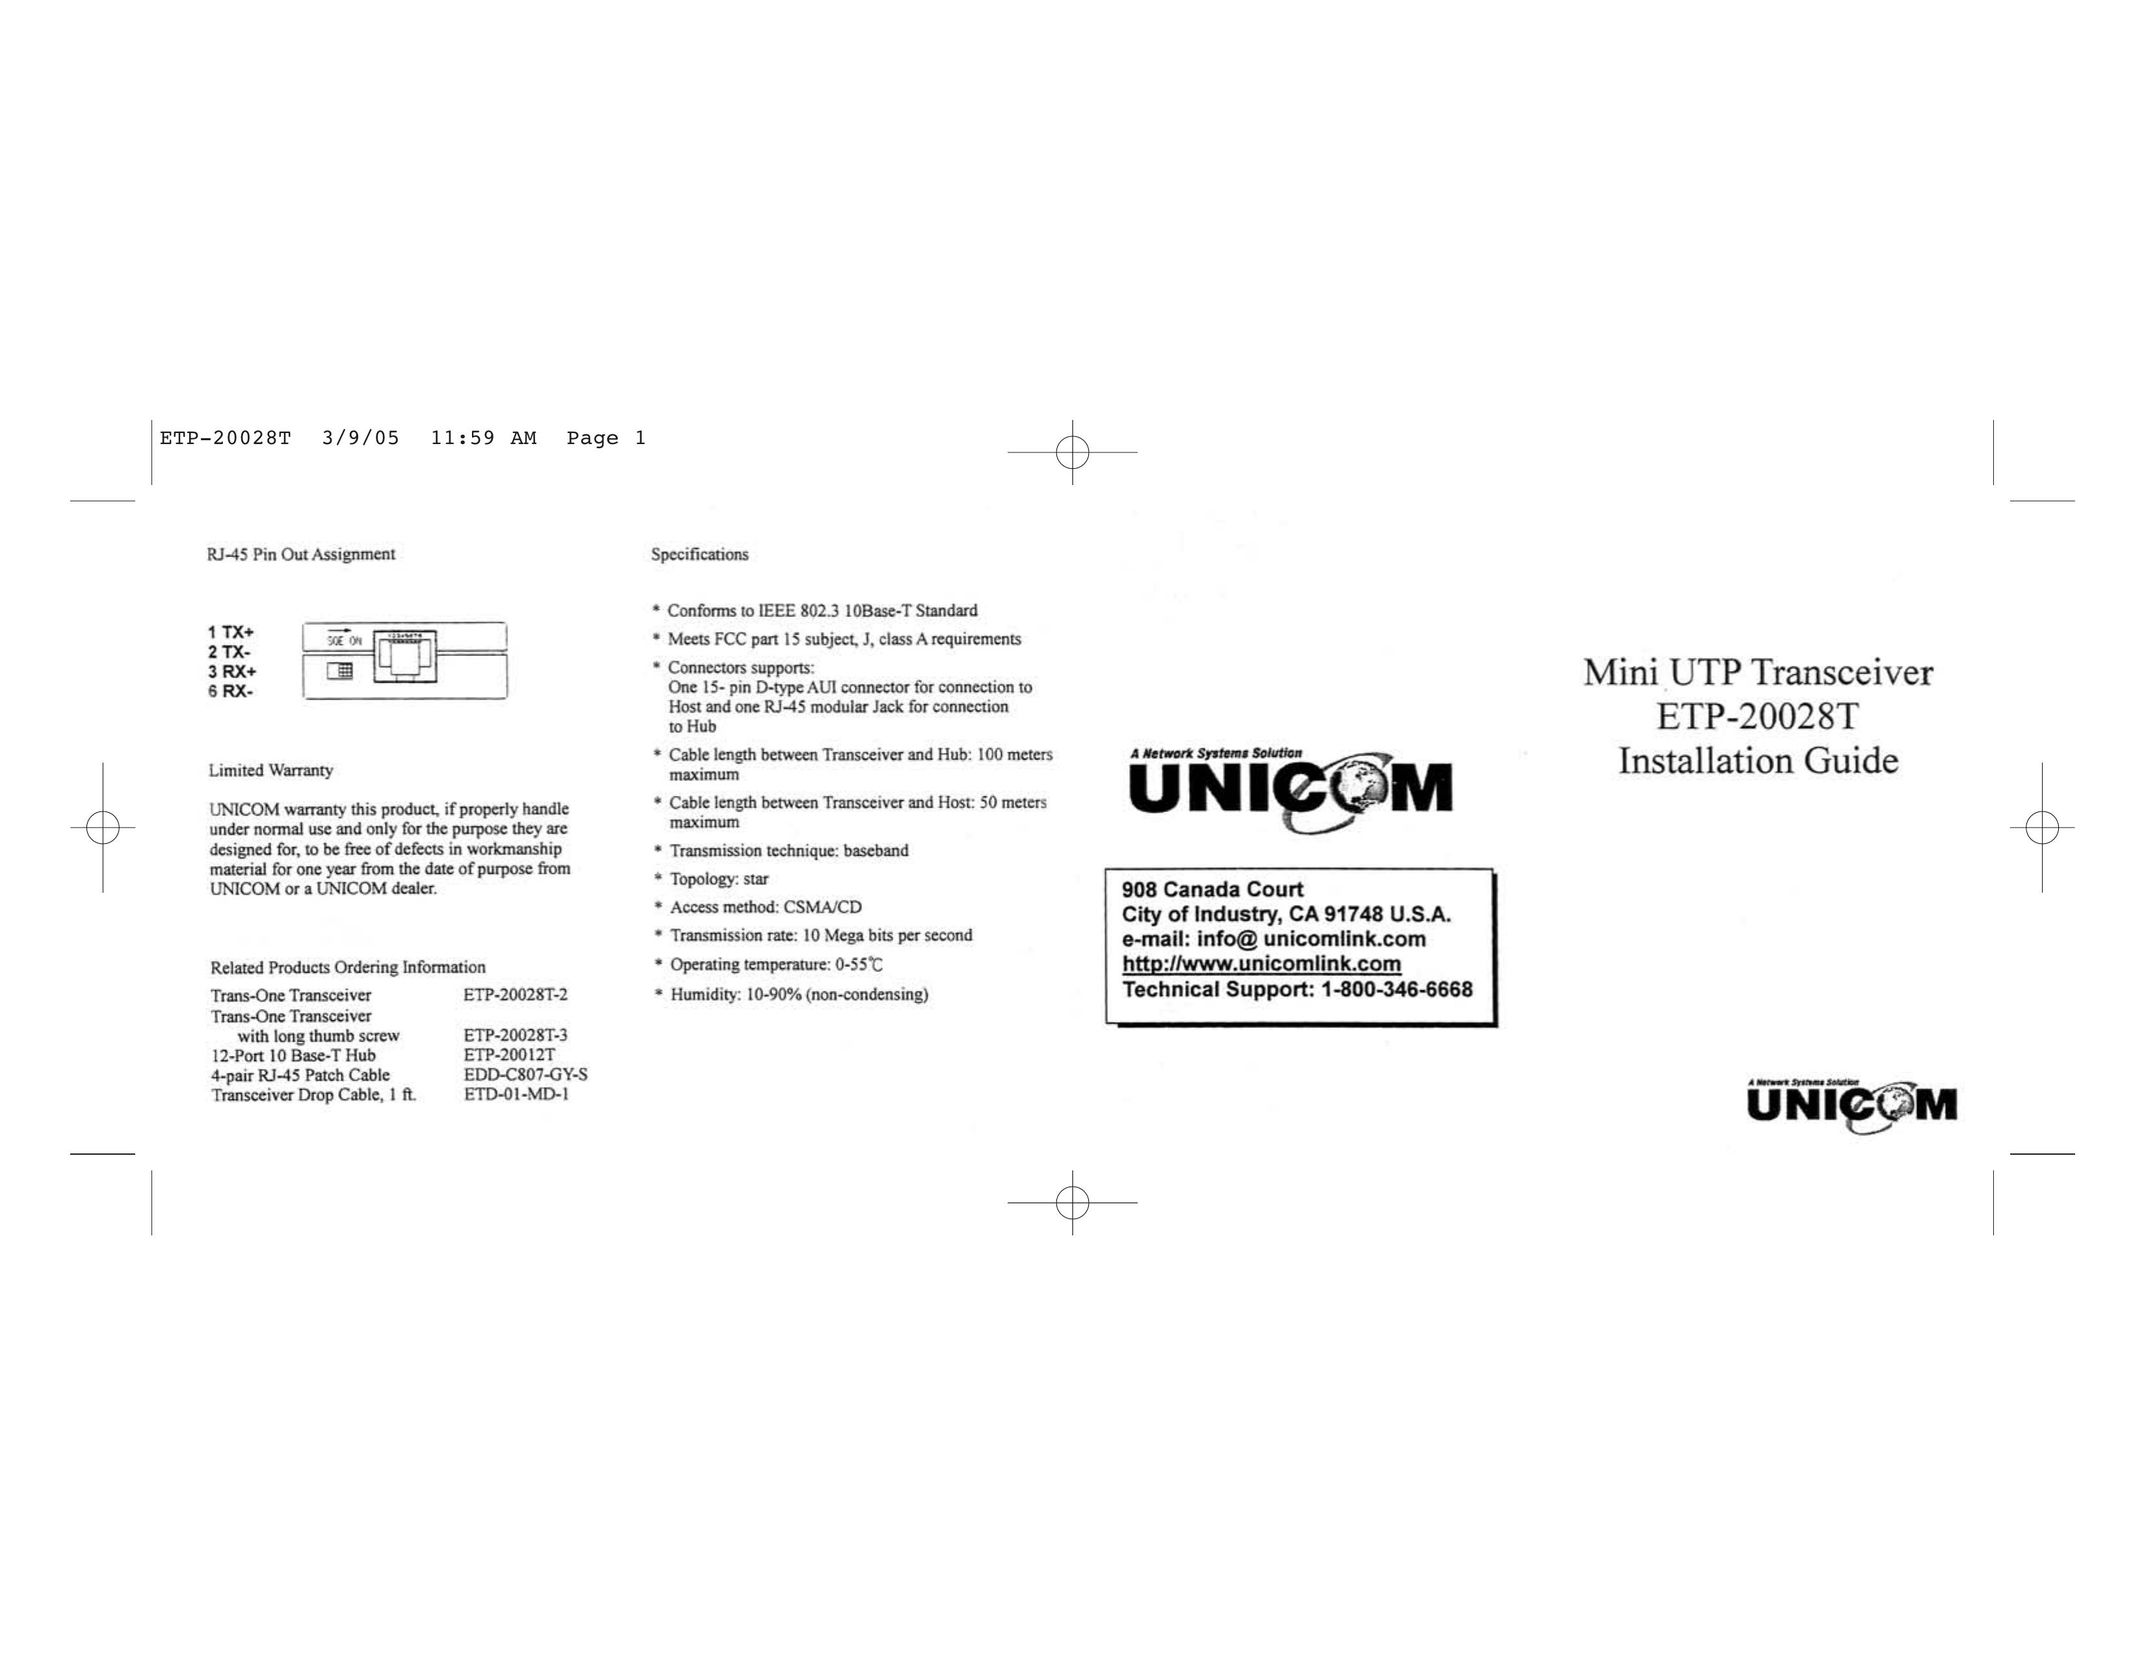 UNICOM Electric ETP-20028T Network Card User Manual